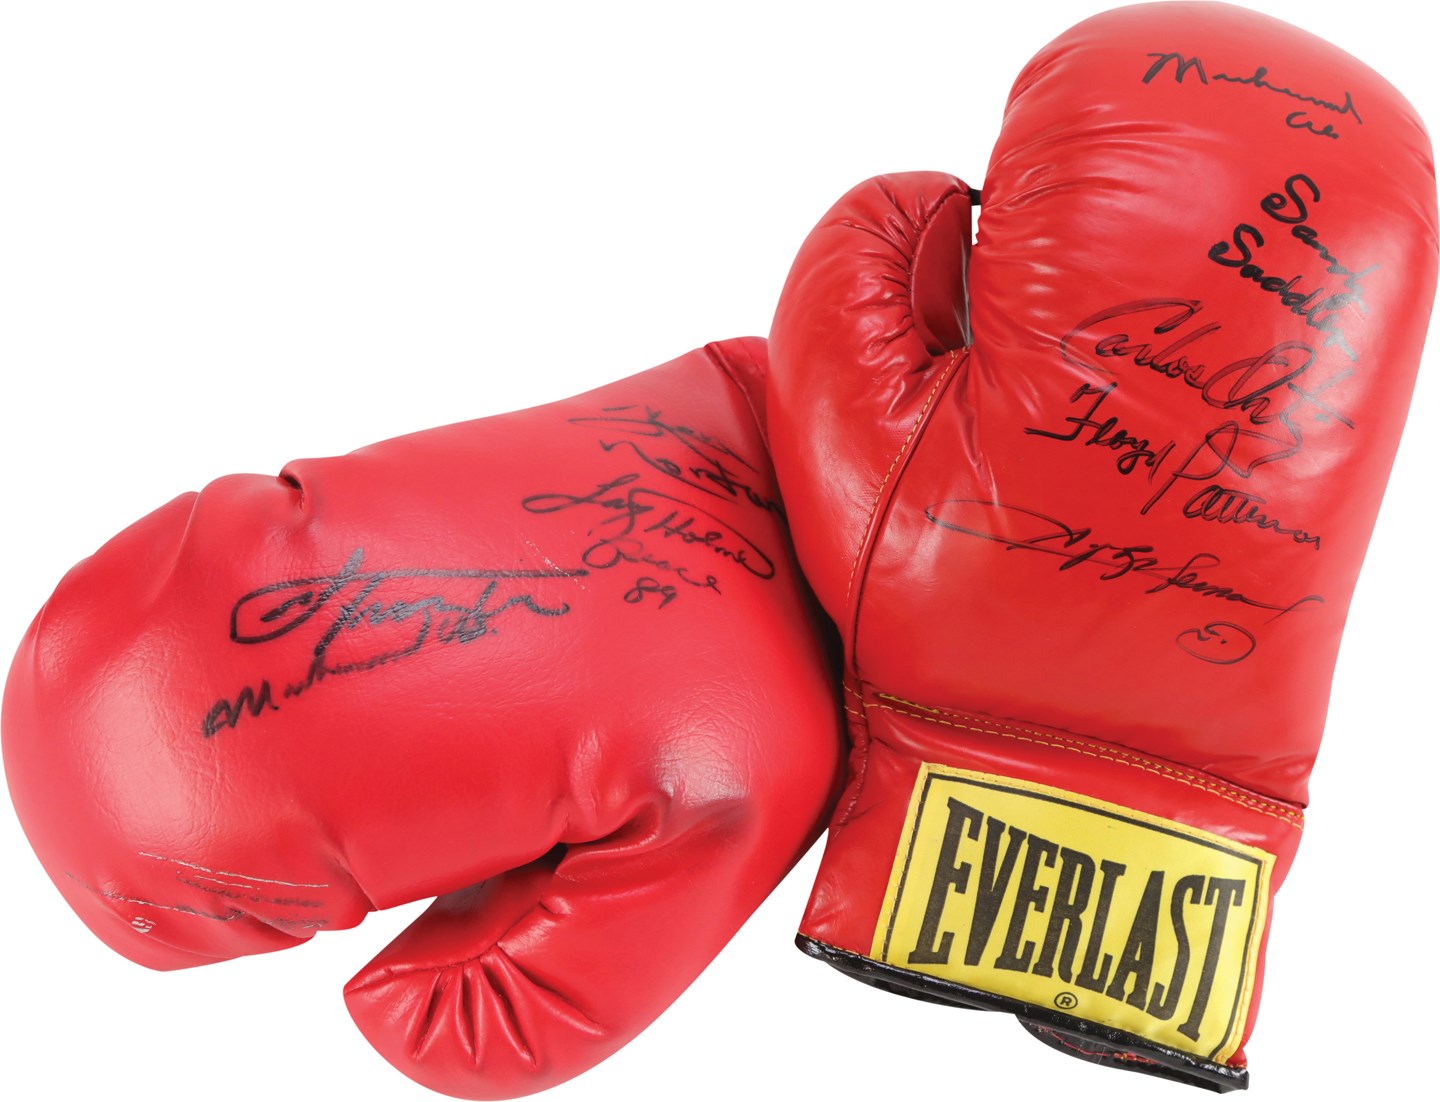 Muhammad Ali & Boxing - Boxing Legends Multi-Signed Gloves w/Muhammad Ali (2)